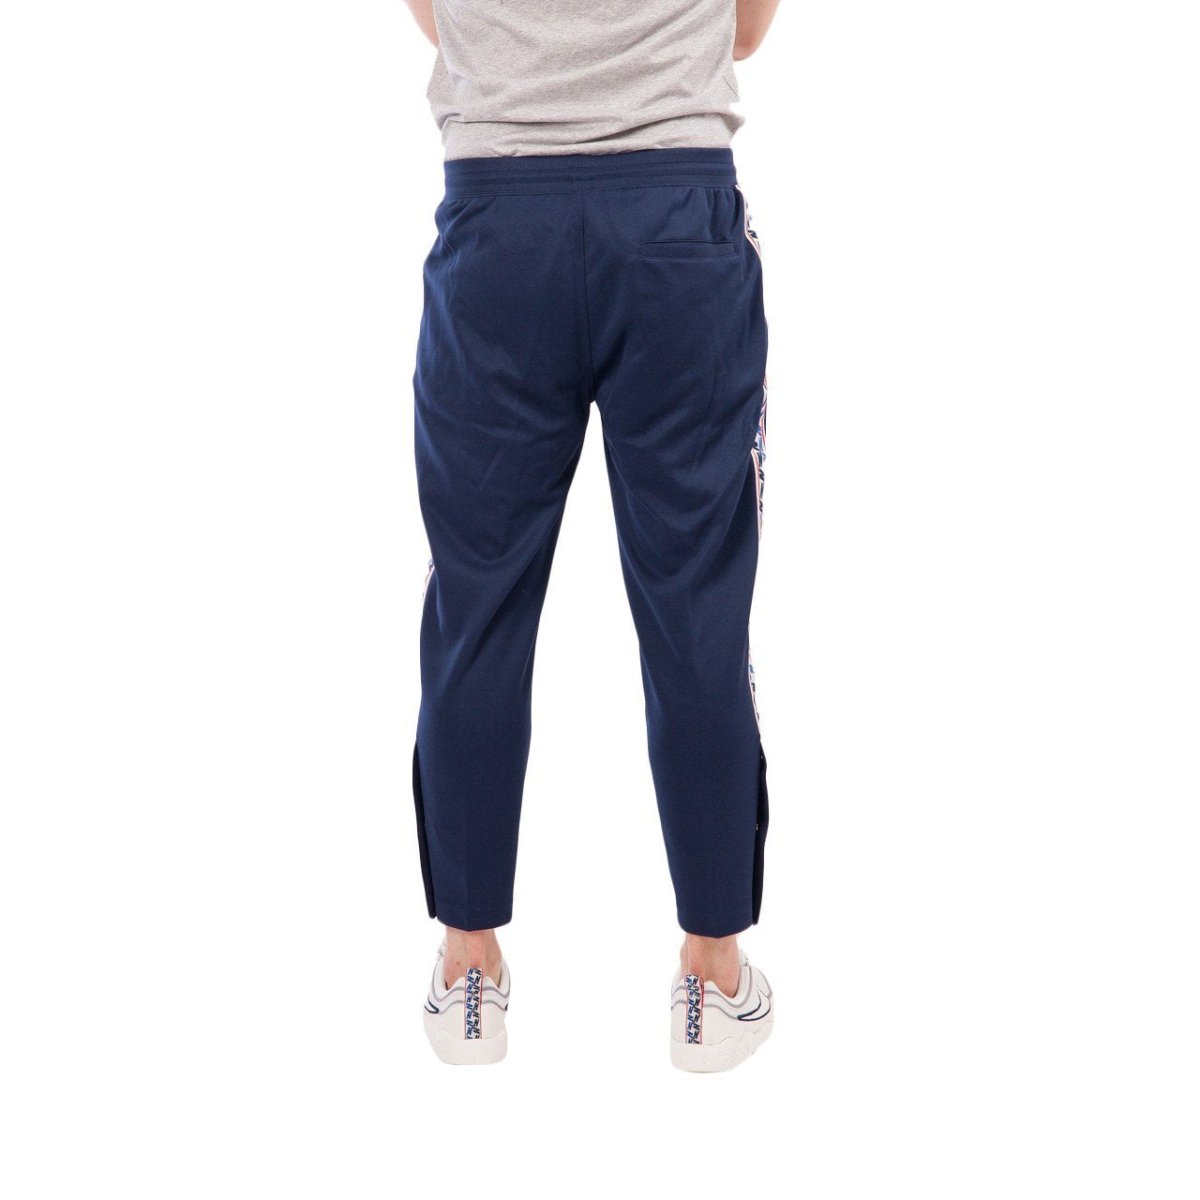 Nike NSW Taped Poly Pants (Dunkelblau / Weiß)  - Allike Store